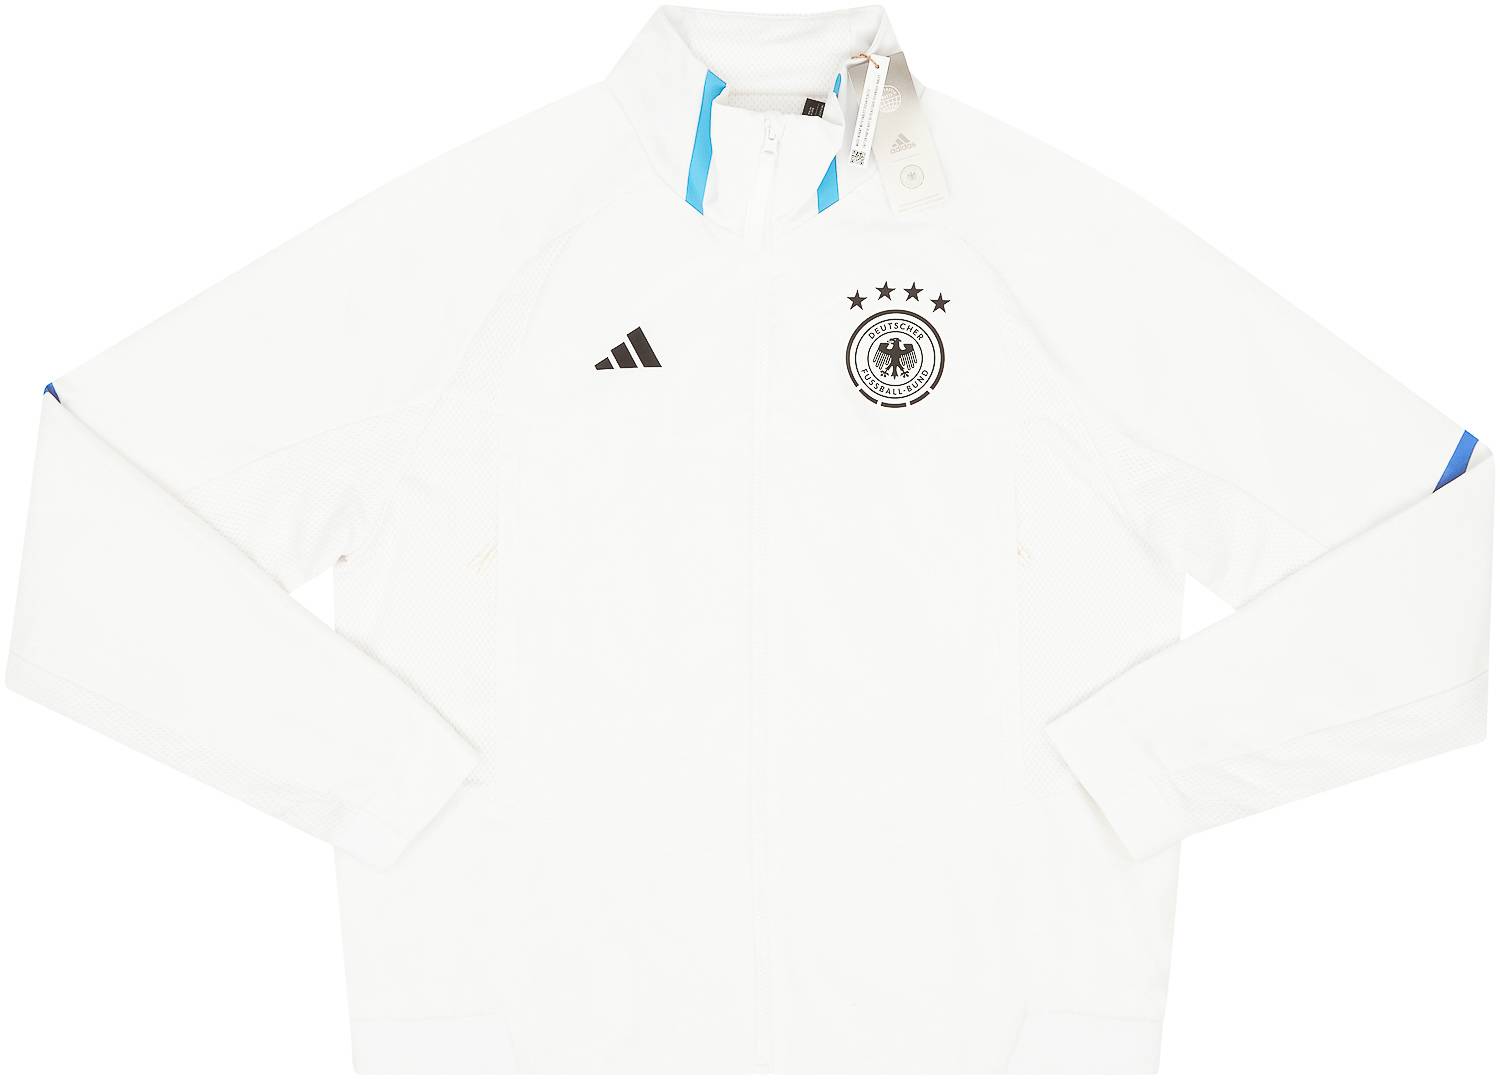 2022-23 Germany adidas Game Day Anthem Jacket